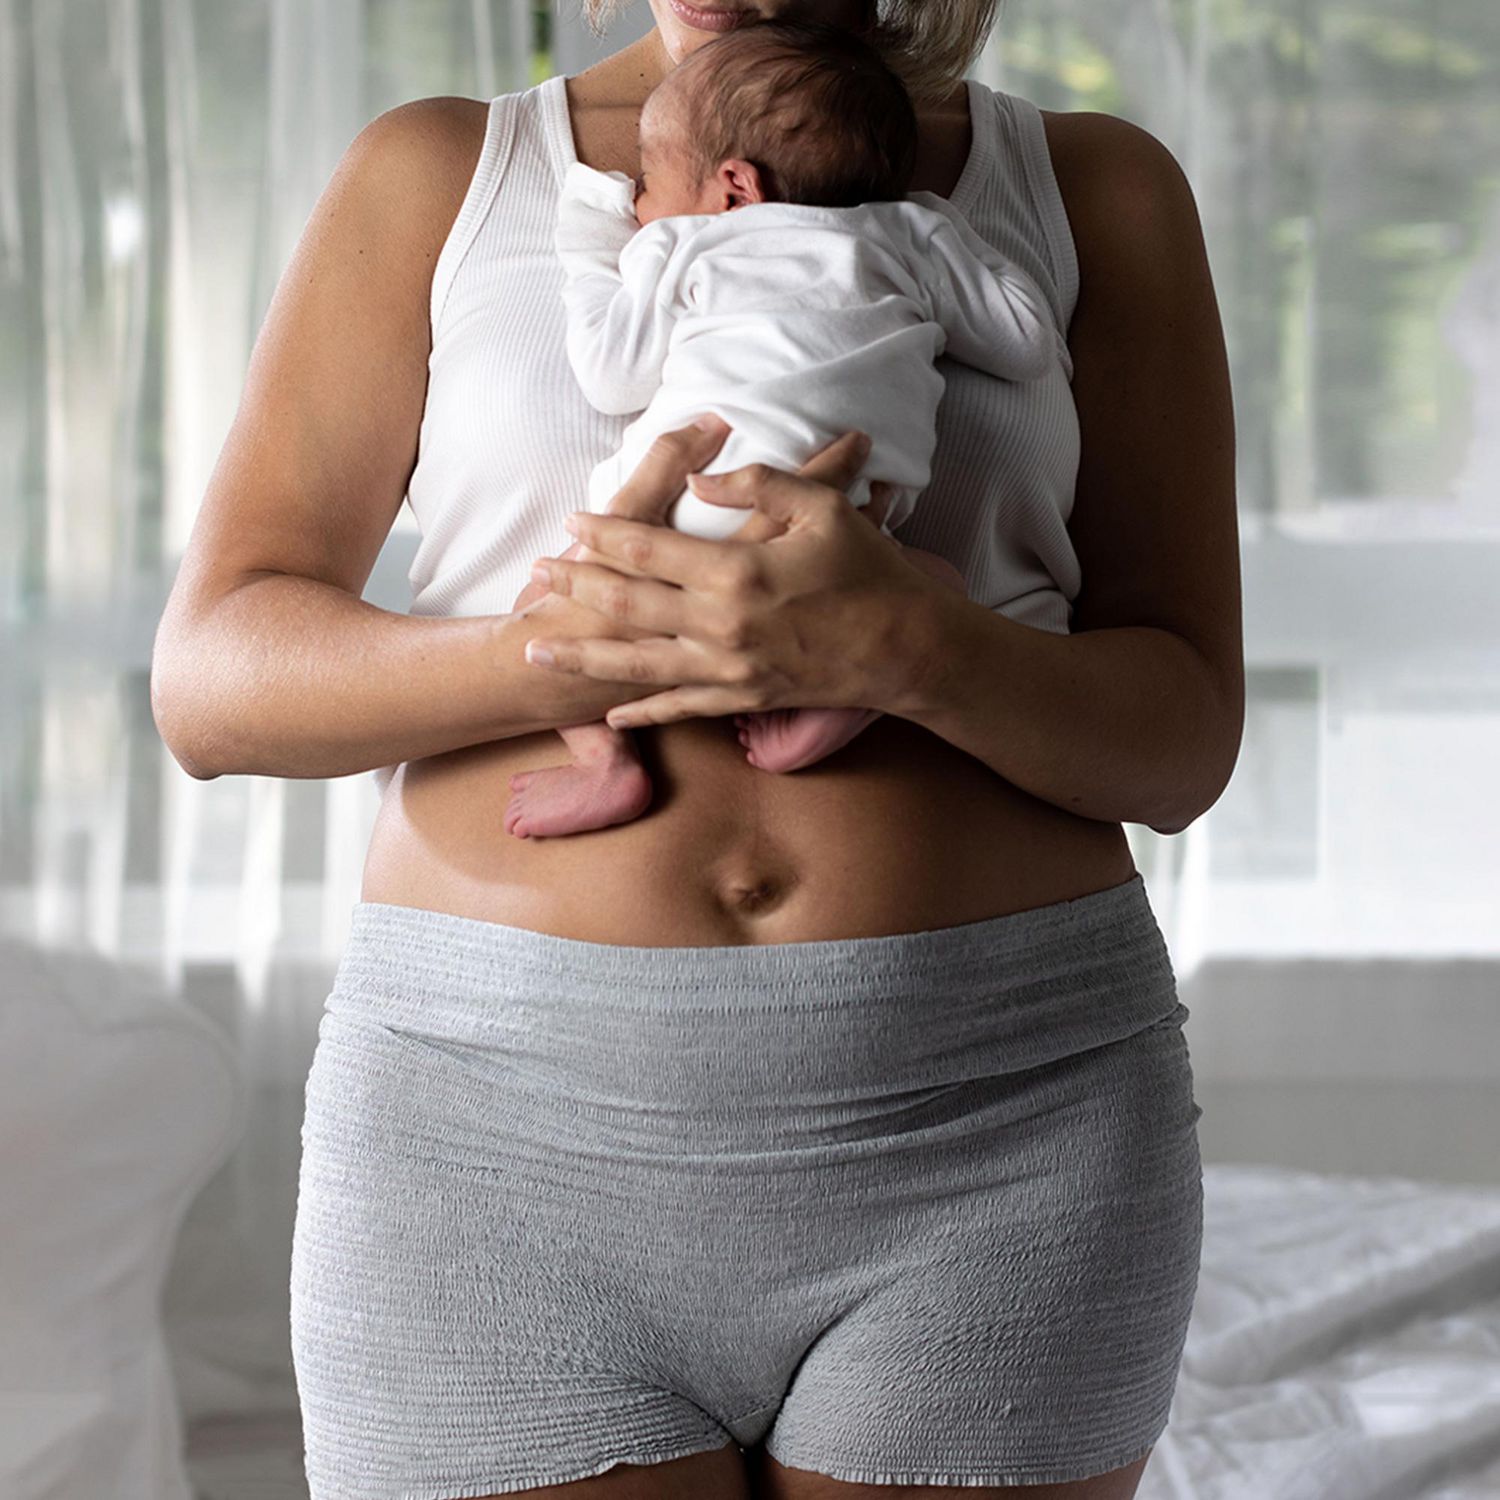 Frida Mom Boyshort 8-Pack Disposable Postpartum Underwear